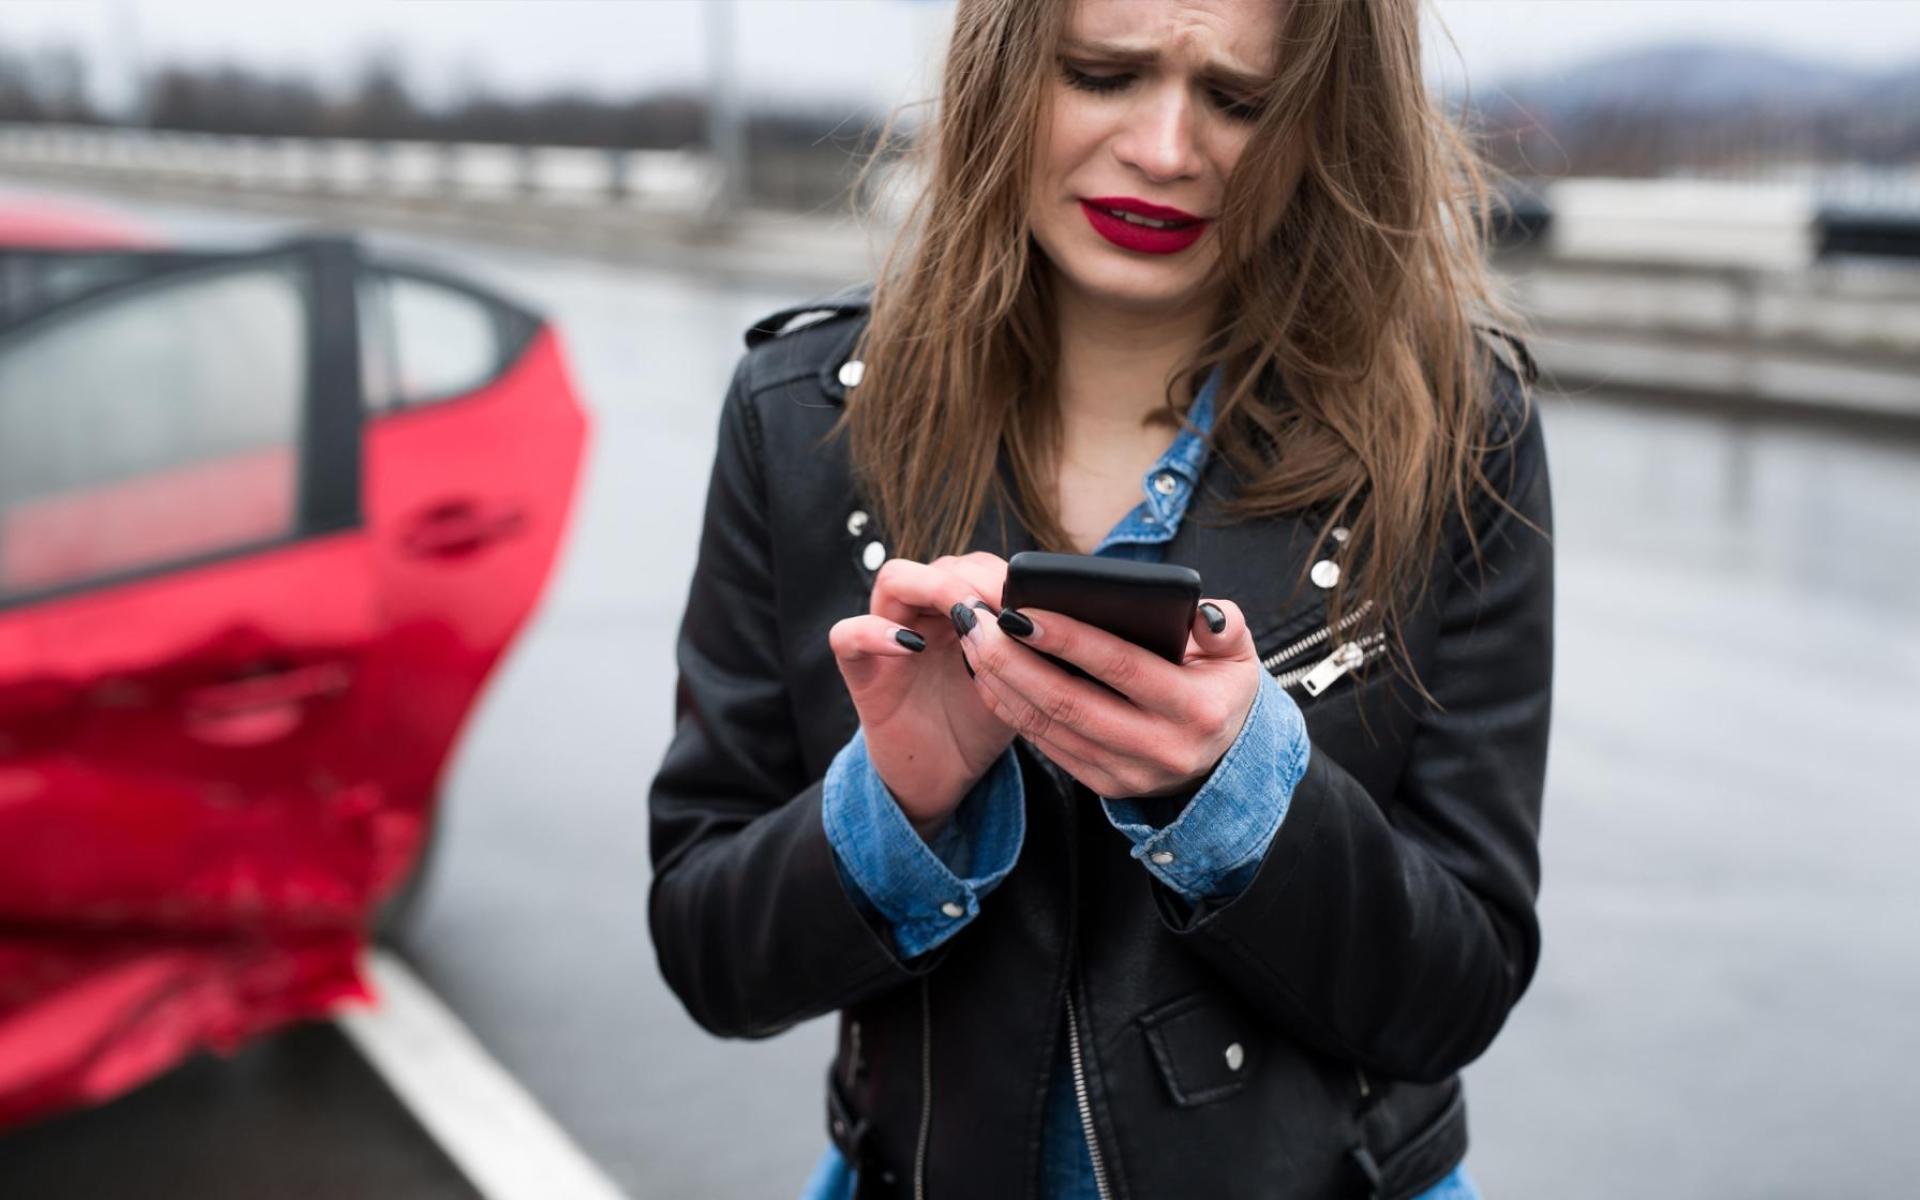 Frau nach Autounfall tuft Hilfe mit Mobiltelefon